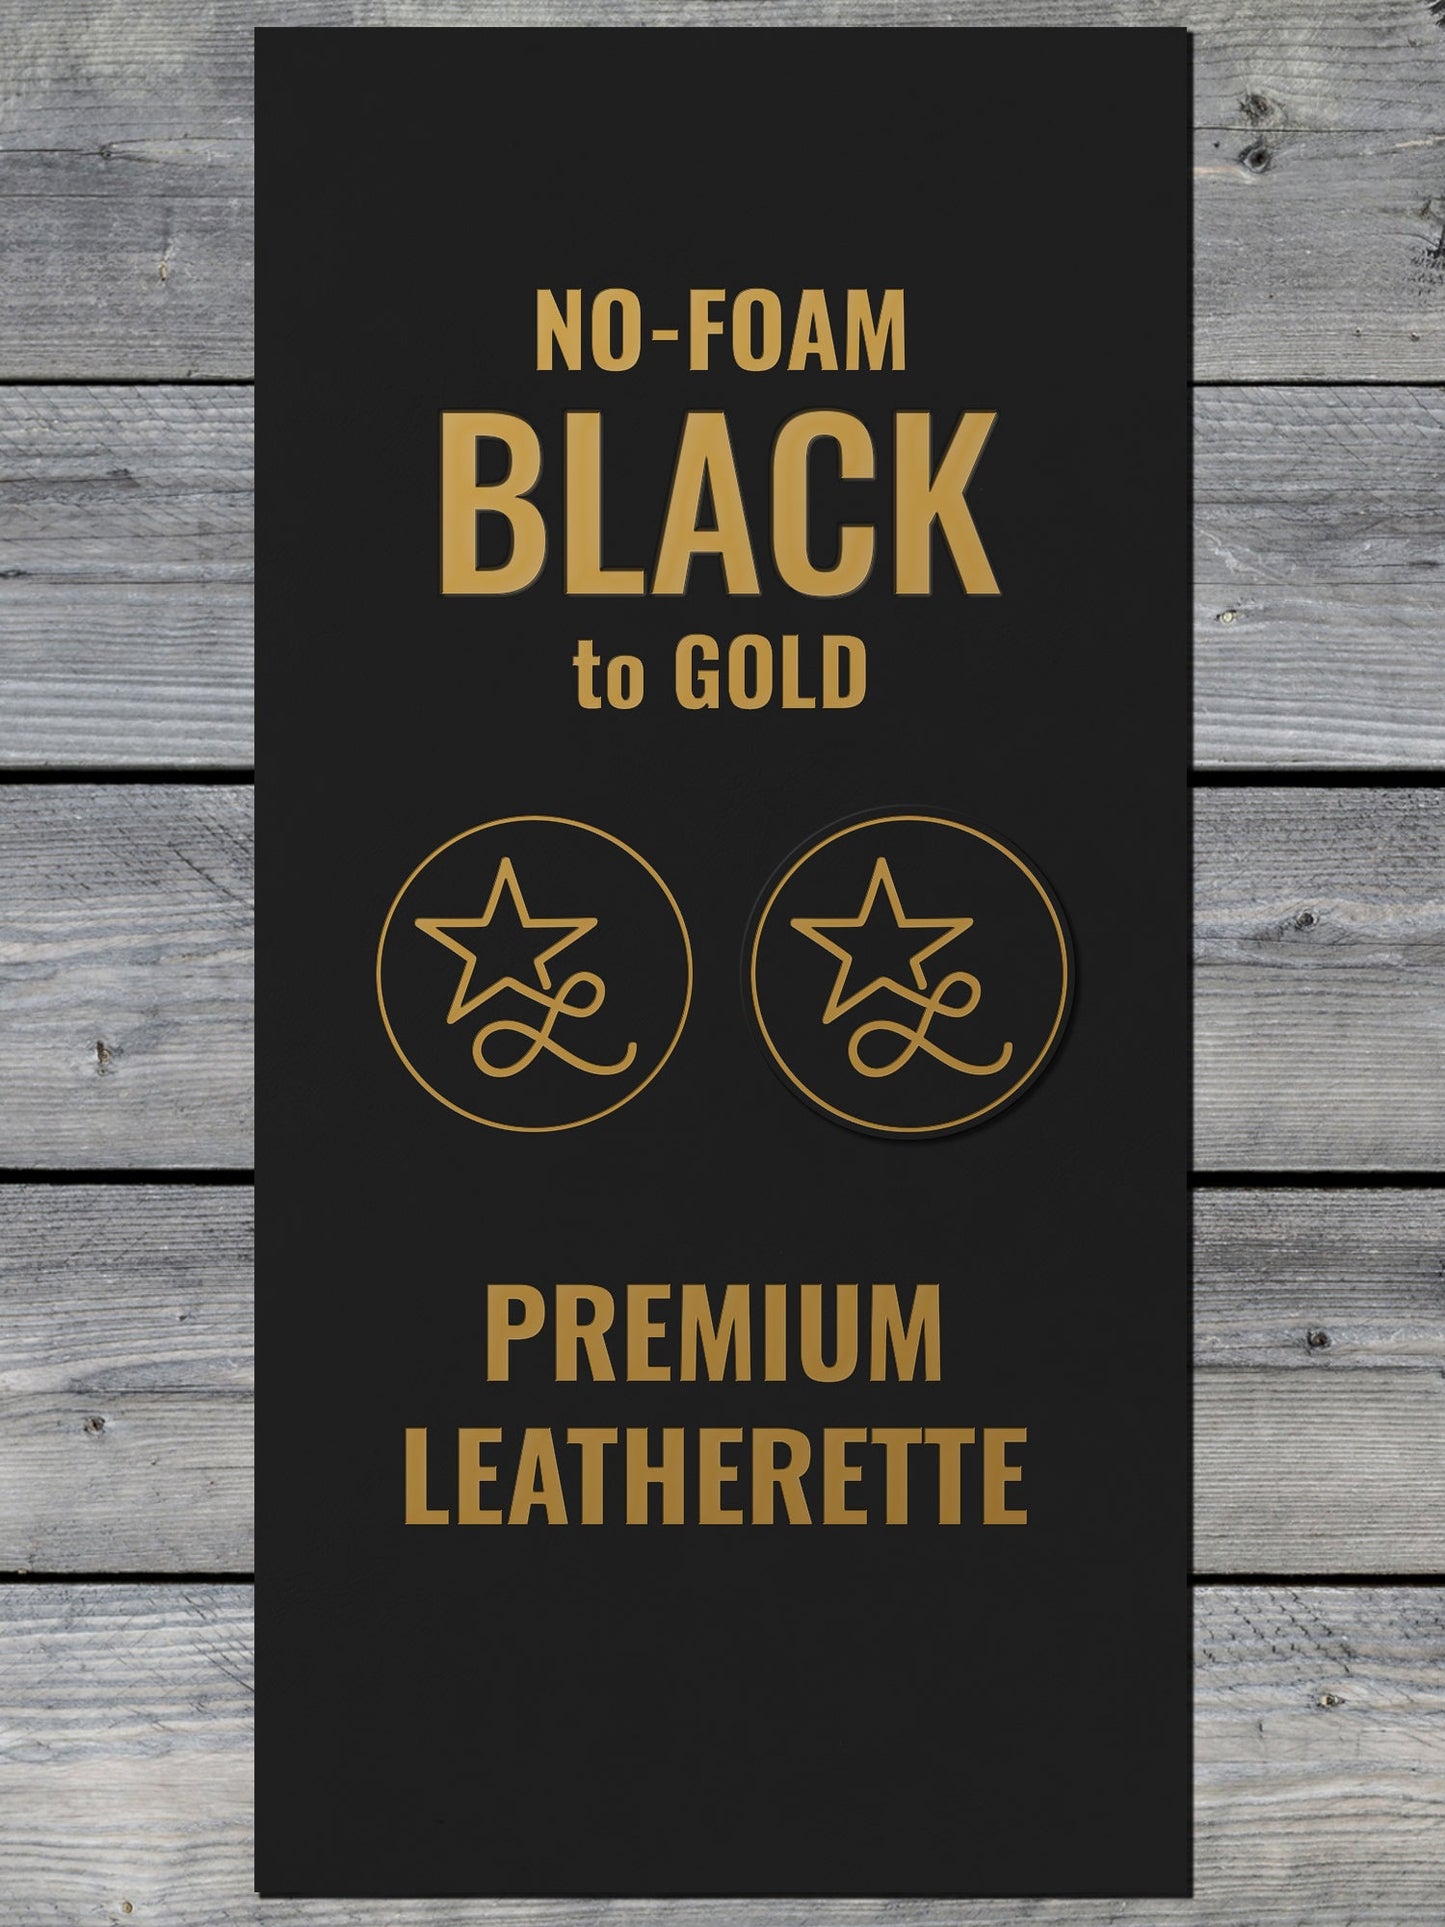 NO-FOAM Black/Gold Durra-Bull Leatherette Sheets (12x24) - #LoneStar Adhesive#